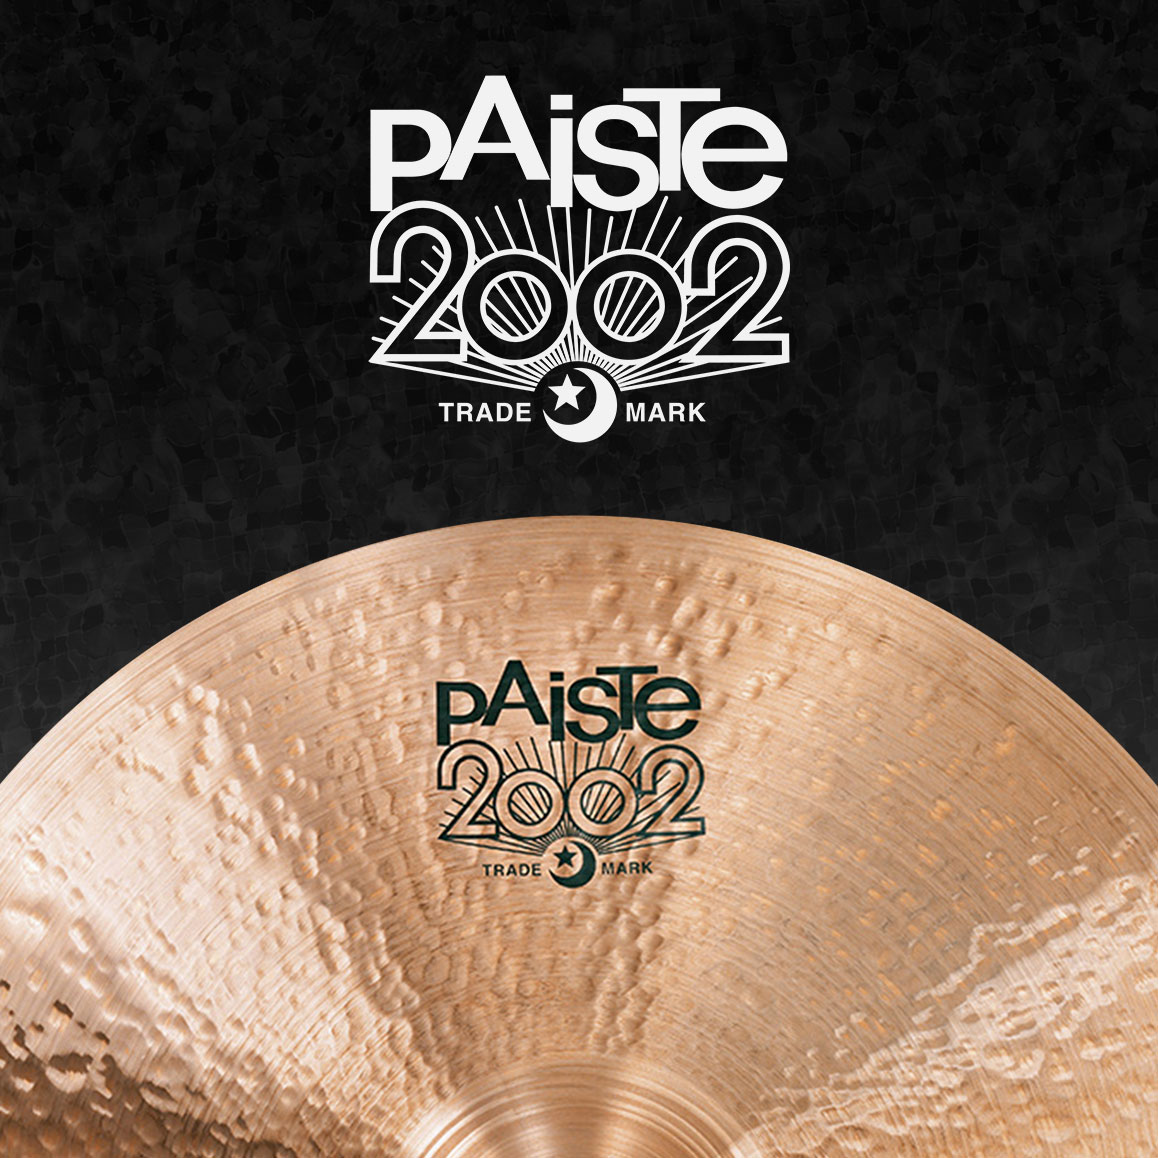 Paiste Cymbals（パイステ シンバル） | モリダイラ楽器